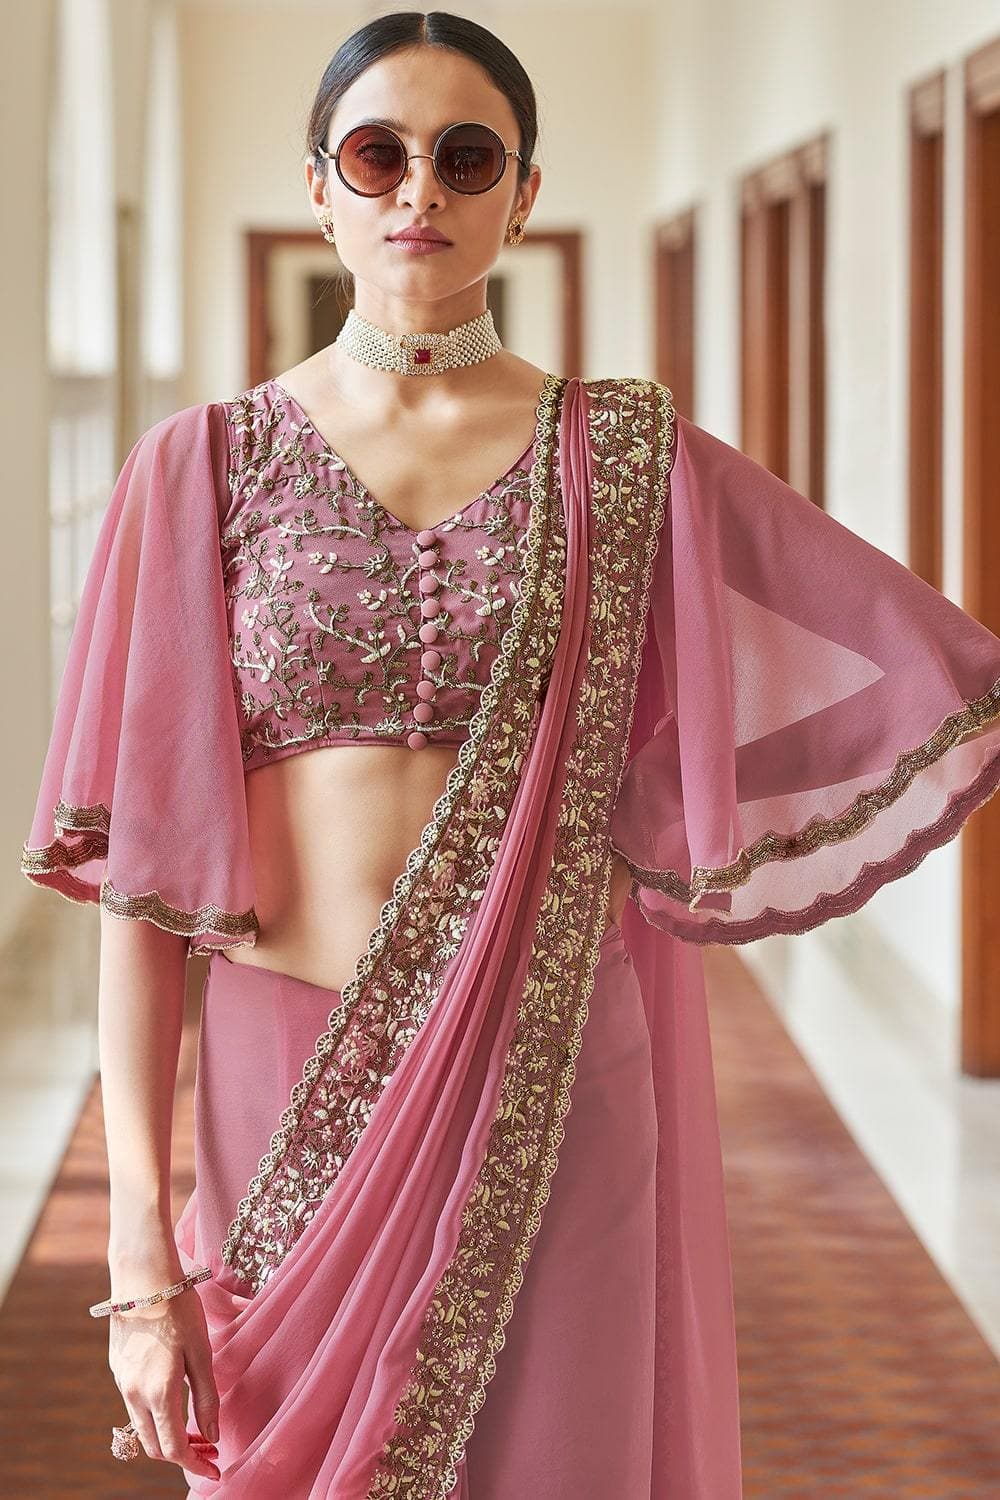 Saree - Buy Latest Designer Indian Sarees Online Collection